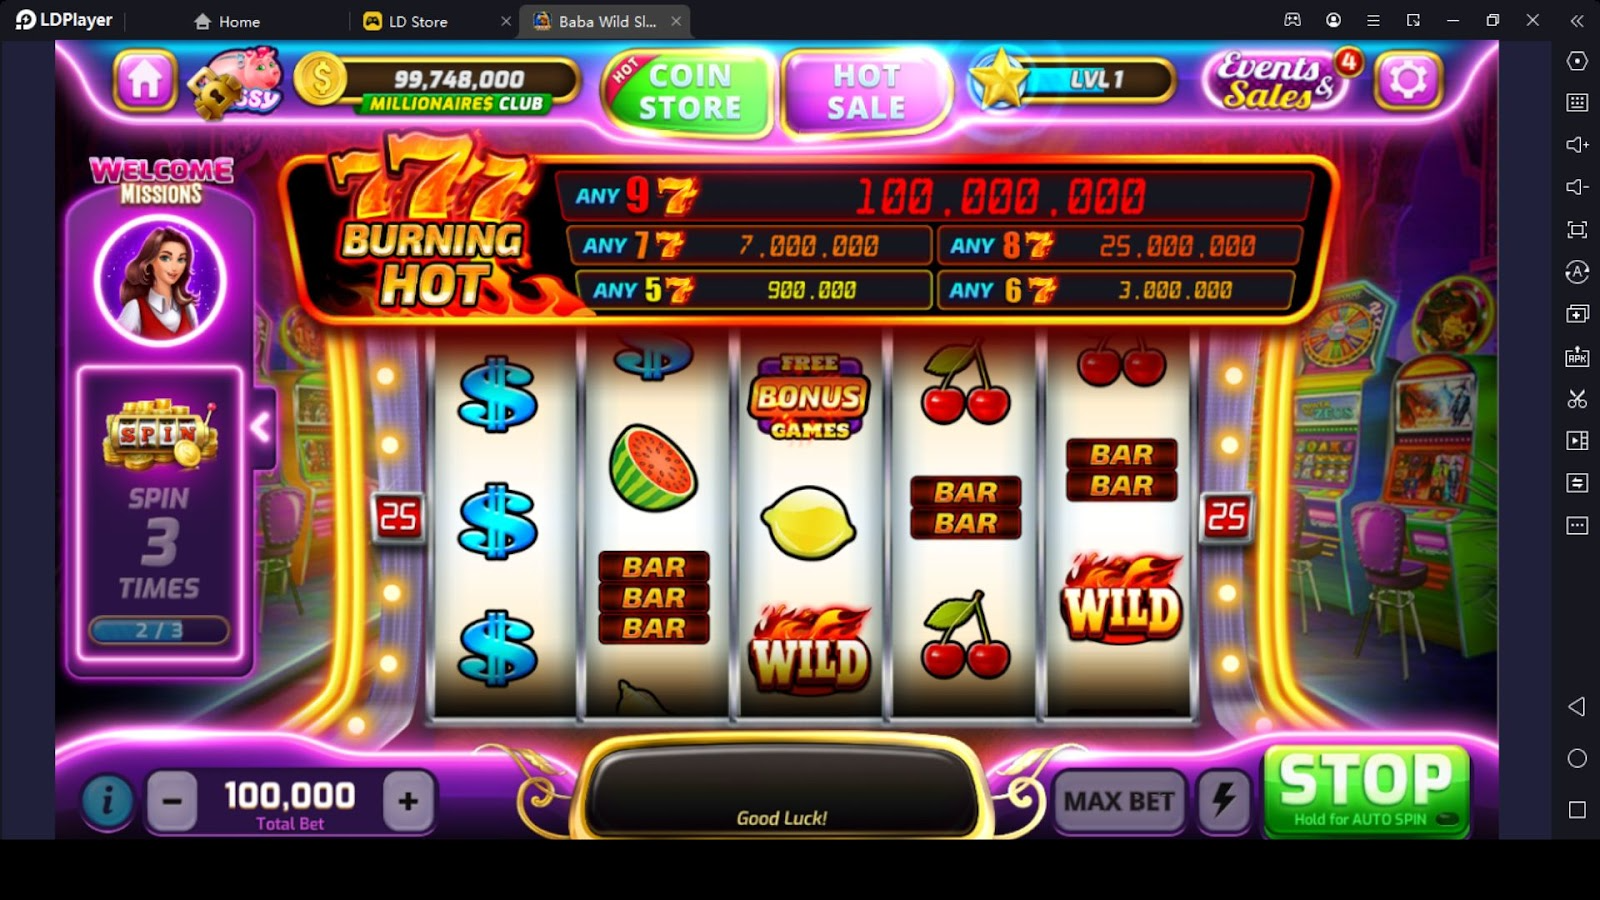 Baba Wild Slots - Slot Machines Vegas Casino Games